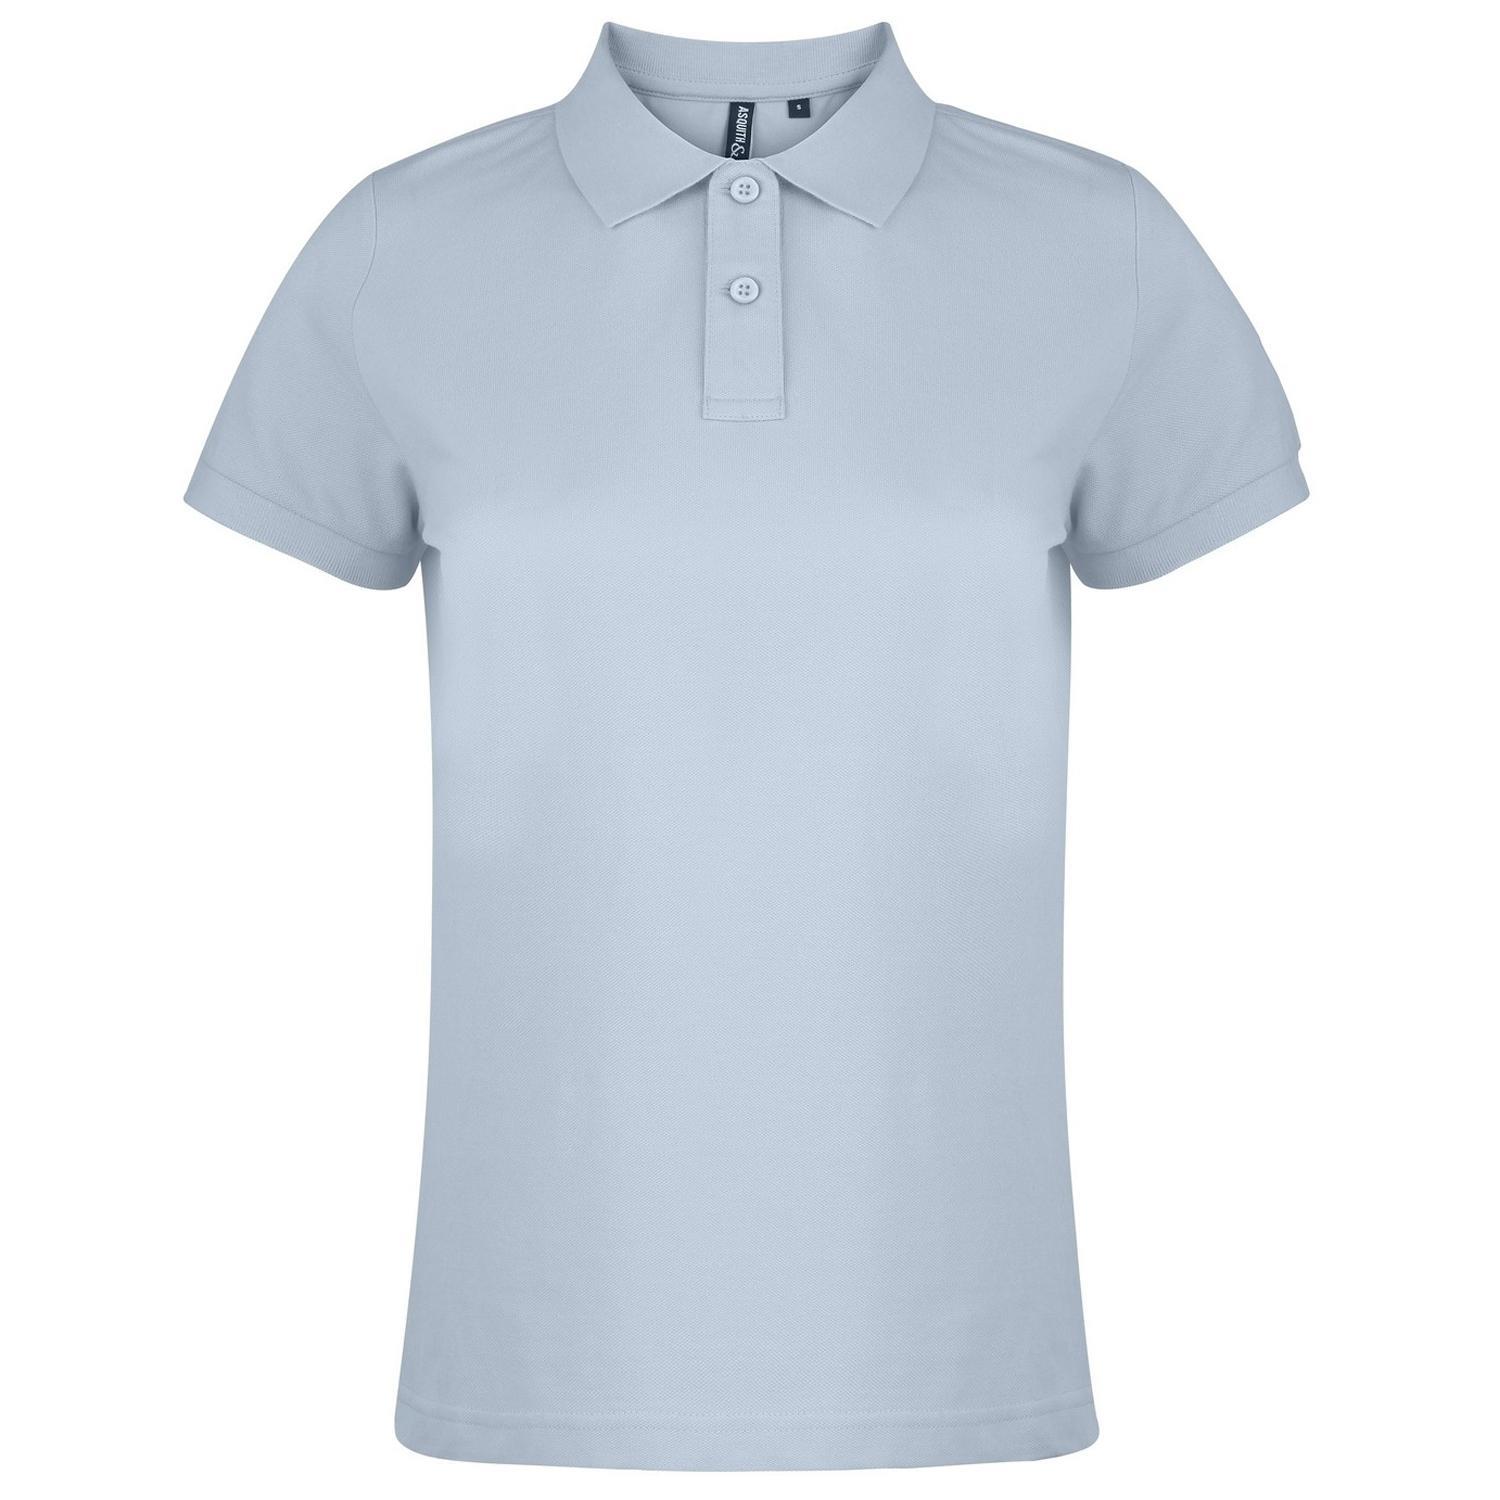 Asquith & Fox Womens/Ladies Plain Short Sleeve Polo Shirt (Turquoise) (S)